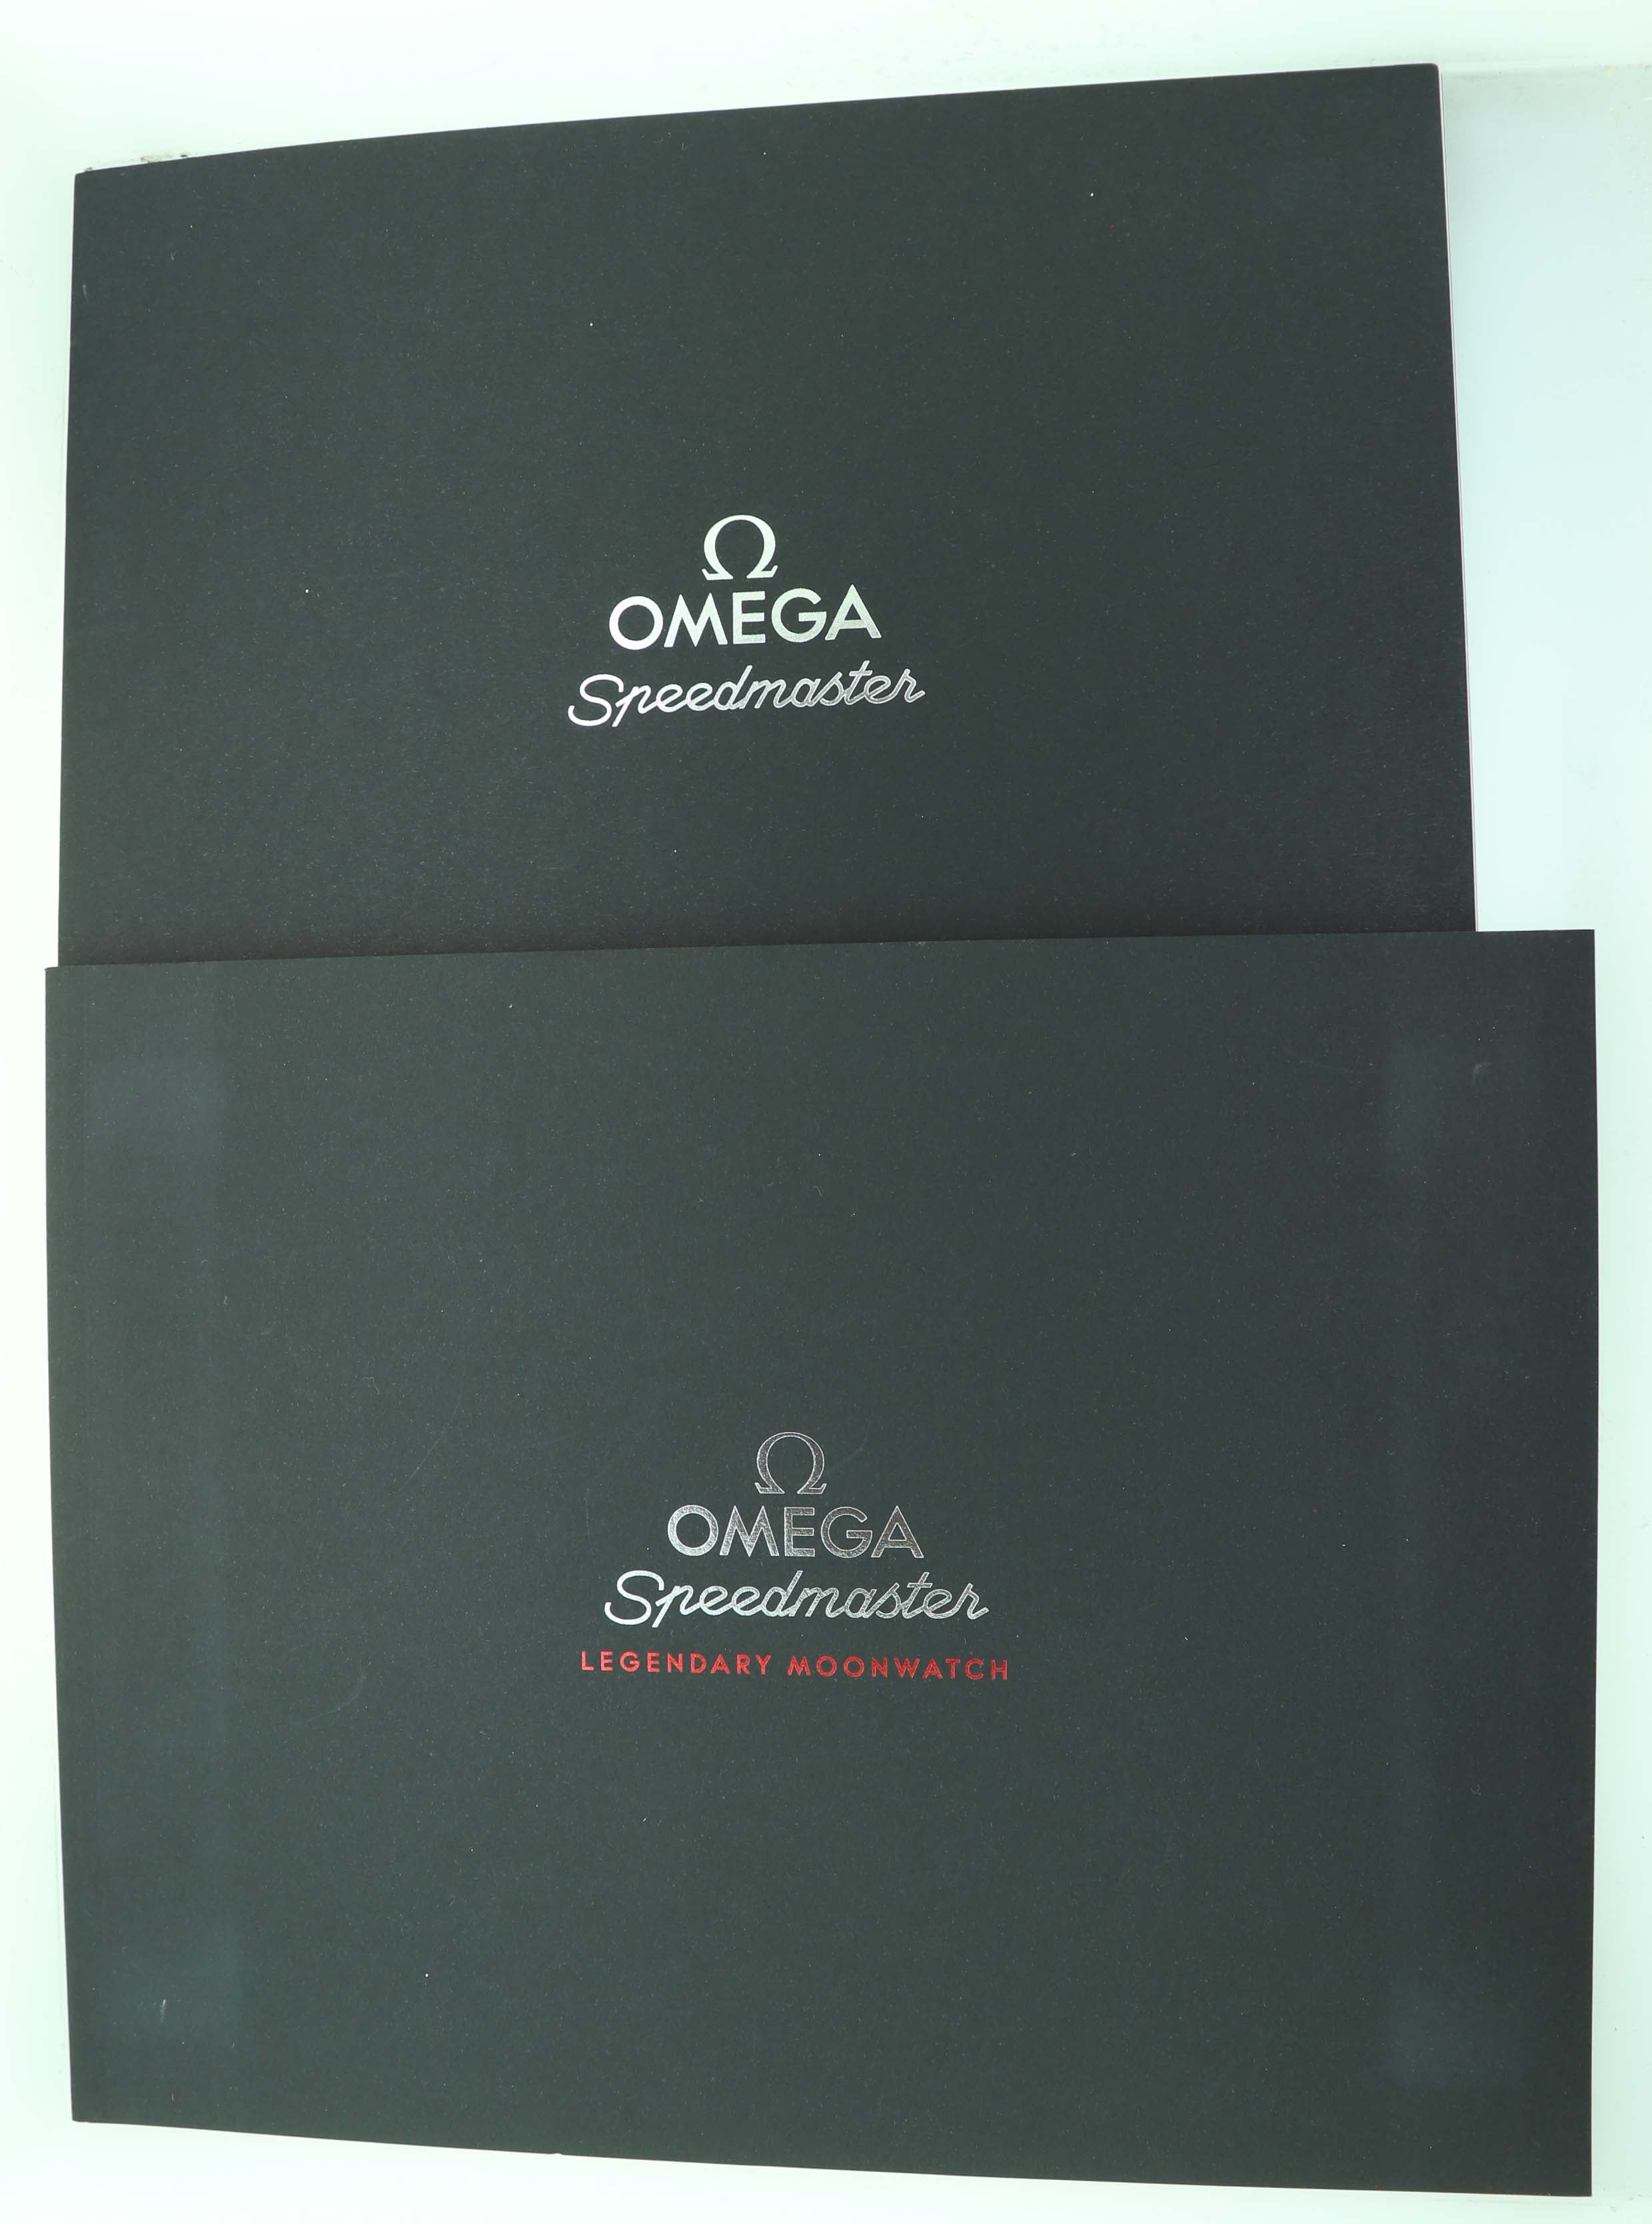 NEW 2019 Omega Speedmaster Professional 311.30.42.30.01.005 Steel Moon Watch